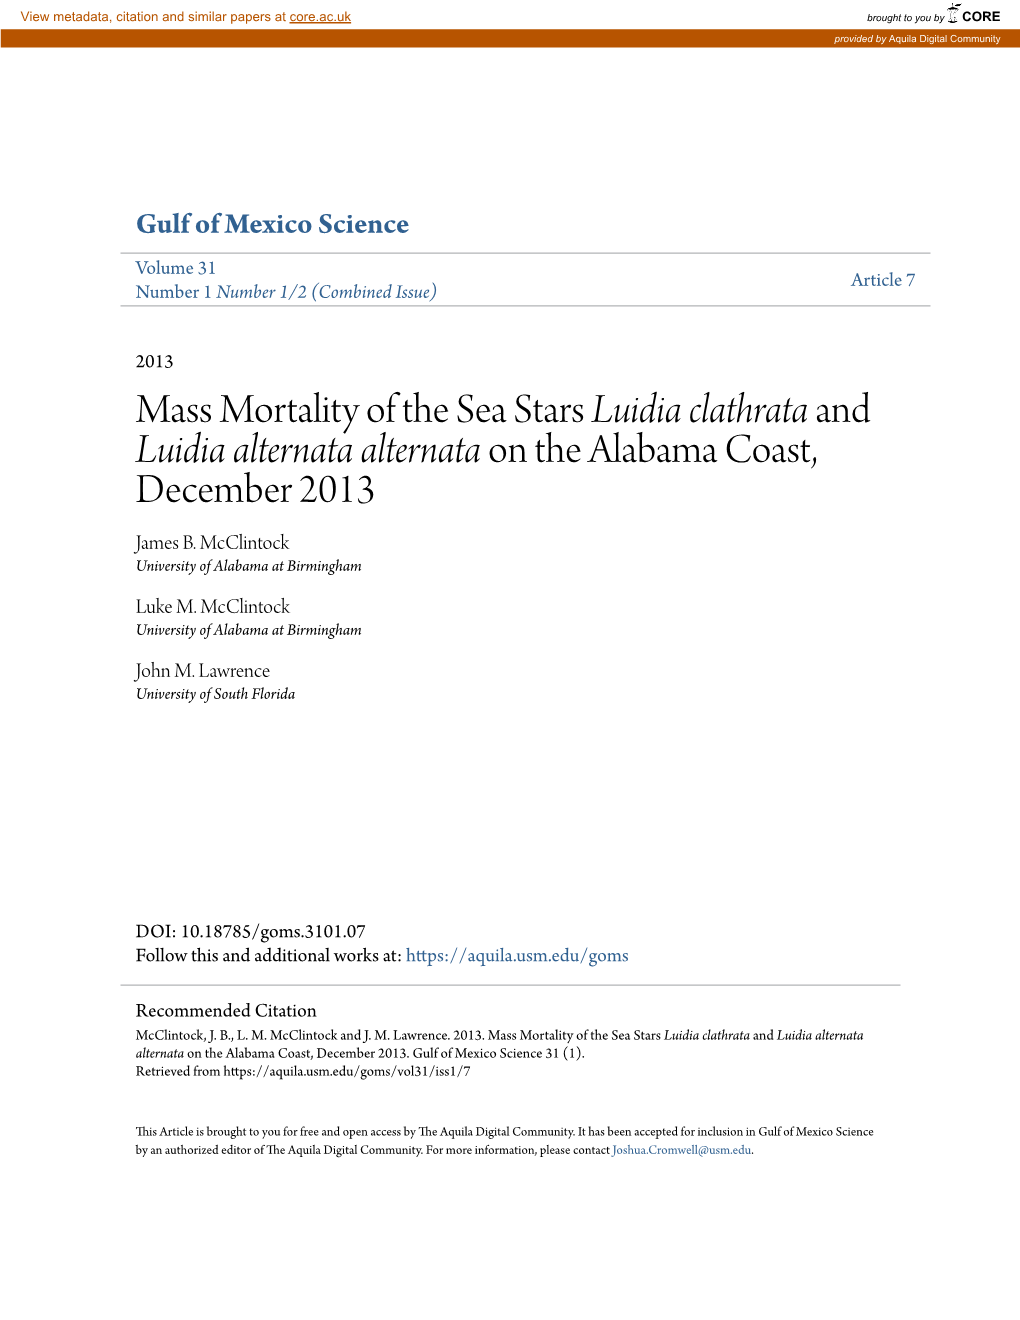 Mass Mortality of the Sea Stars Luidia Clathrata and Luidia Alternata Alternata on the Alabama Coast, December 2013 James B